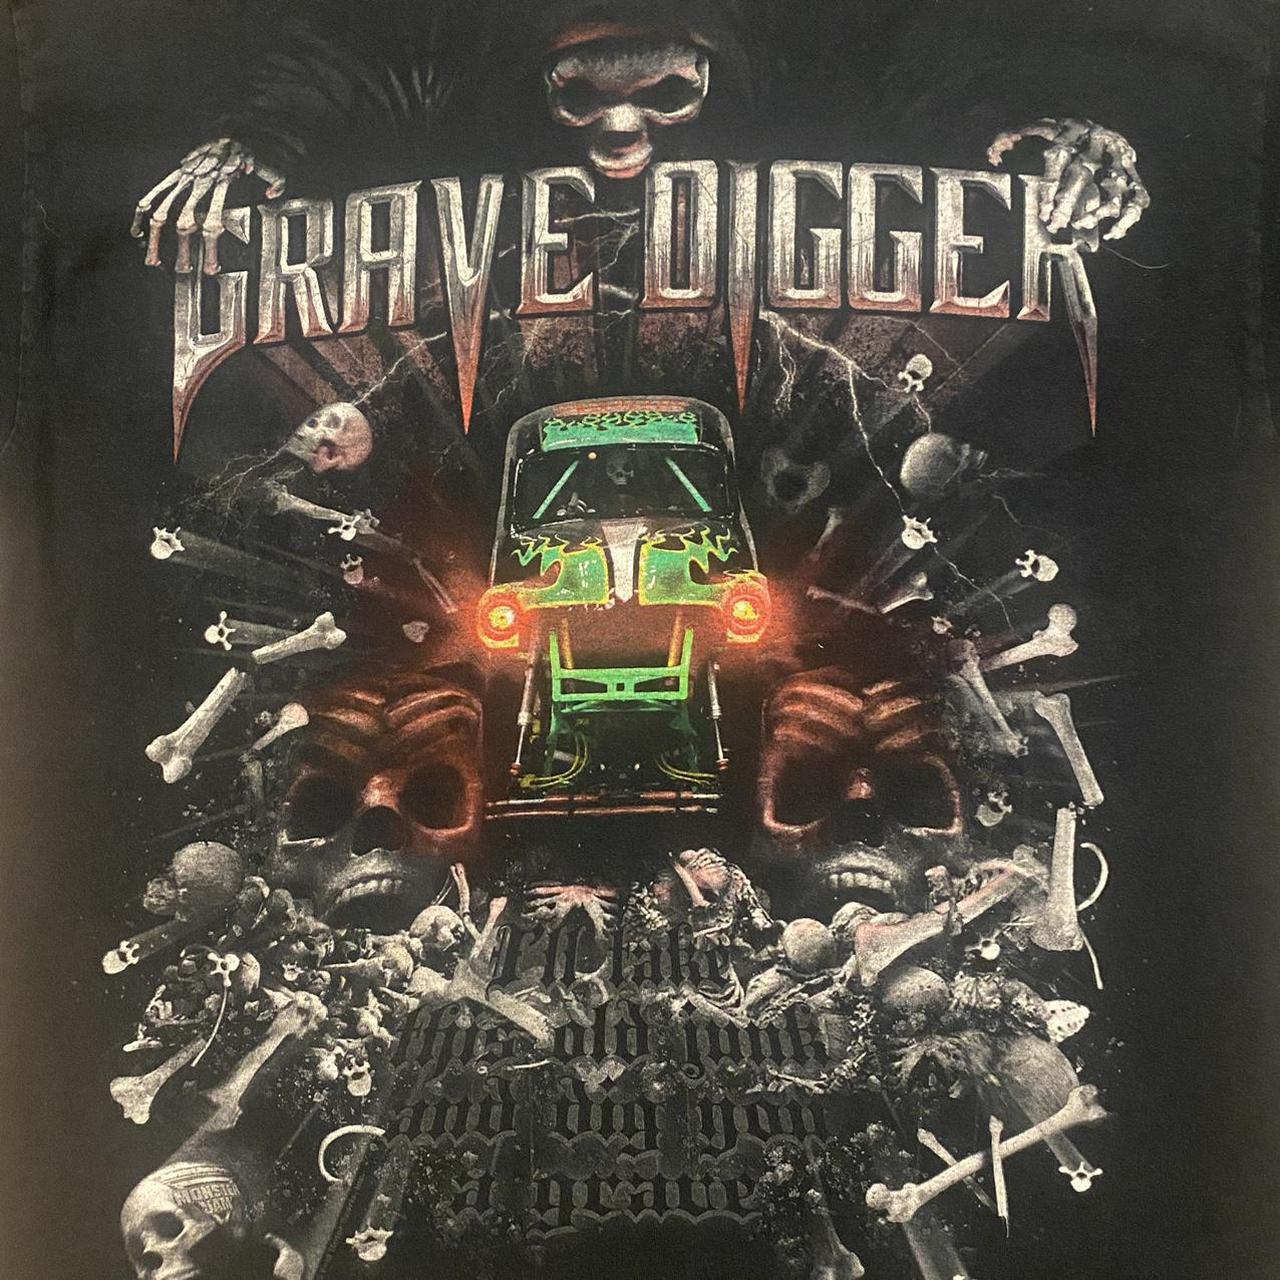 Product Image 2 - Monster truck Grave Digger shirt!

Measurements:
p2p